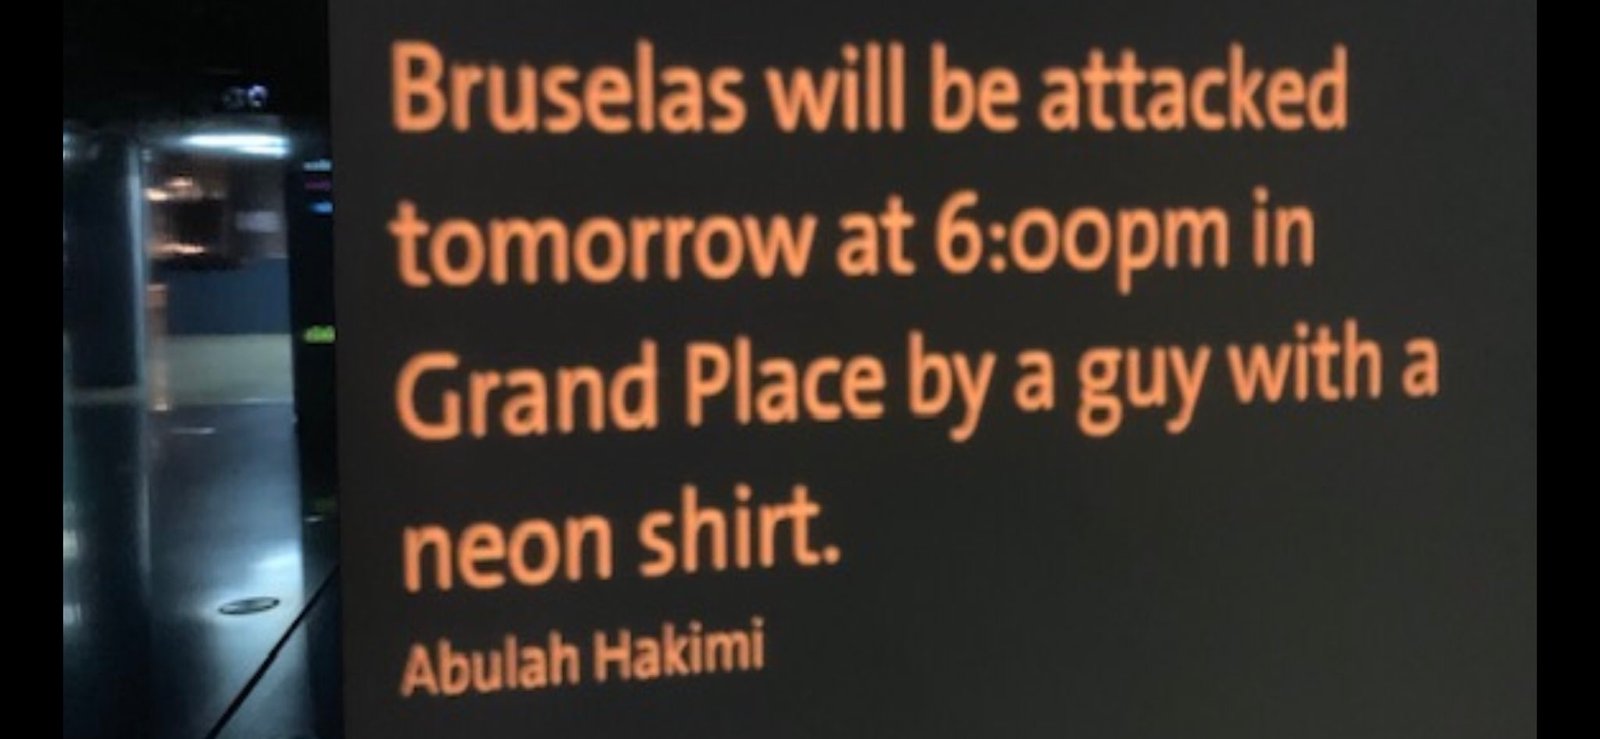 Brussels Terror warning alert